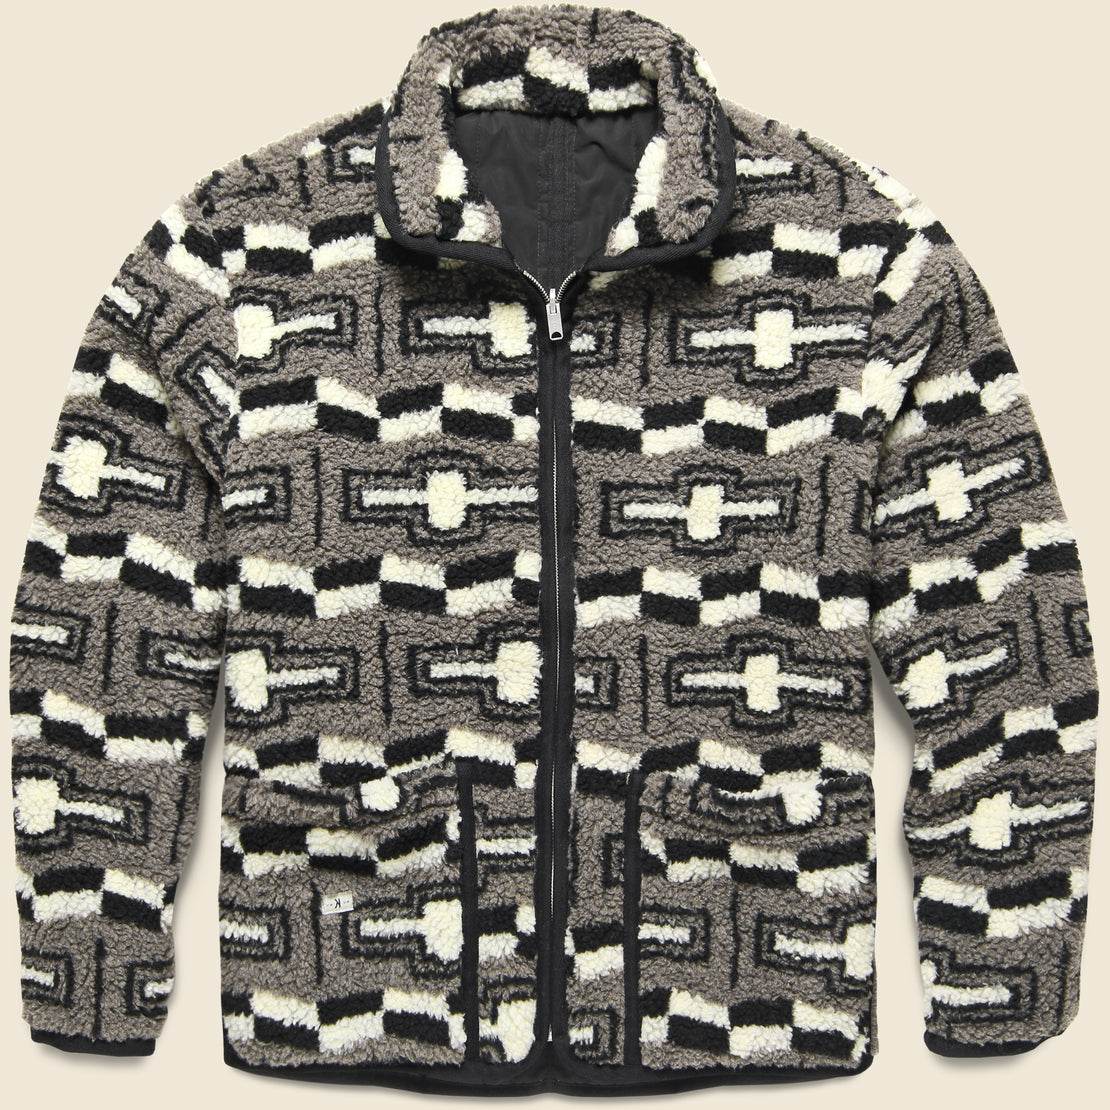 Knickerbocker Reverse Zip Pile & Quilt Jacket - Grey